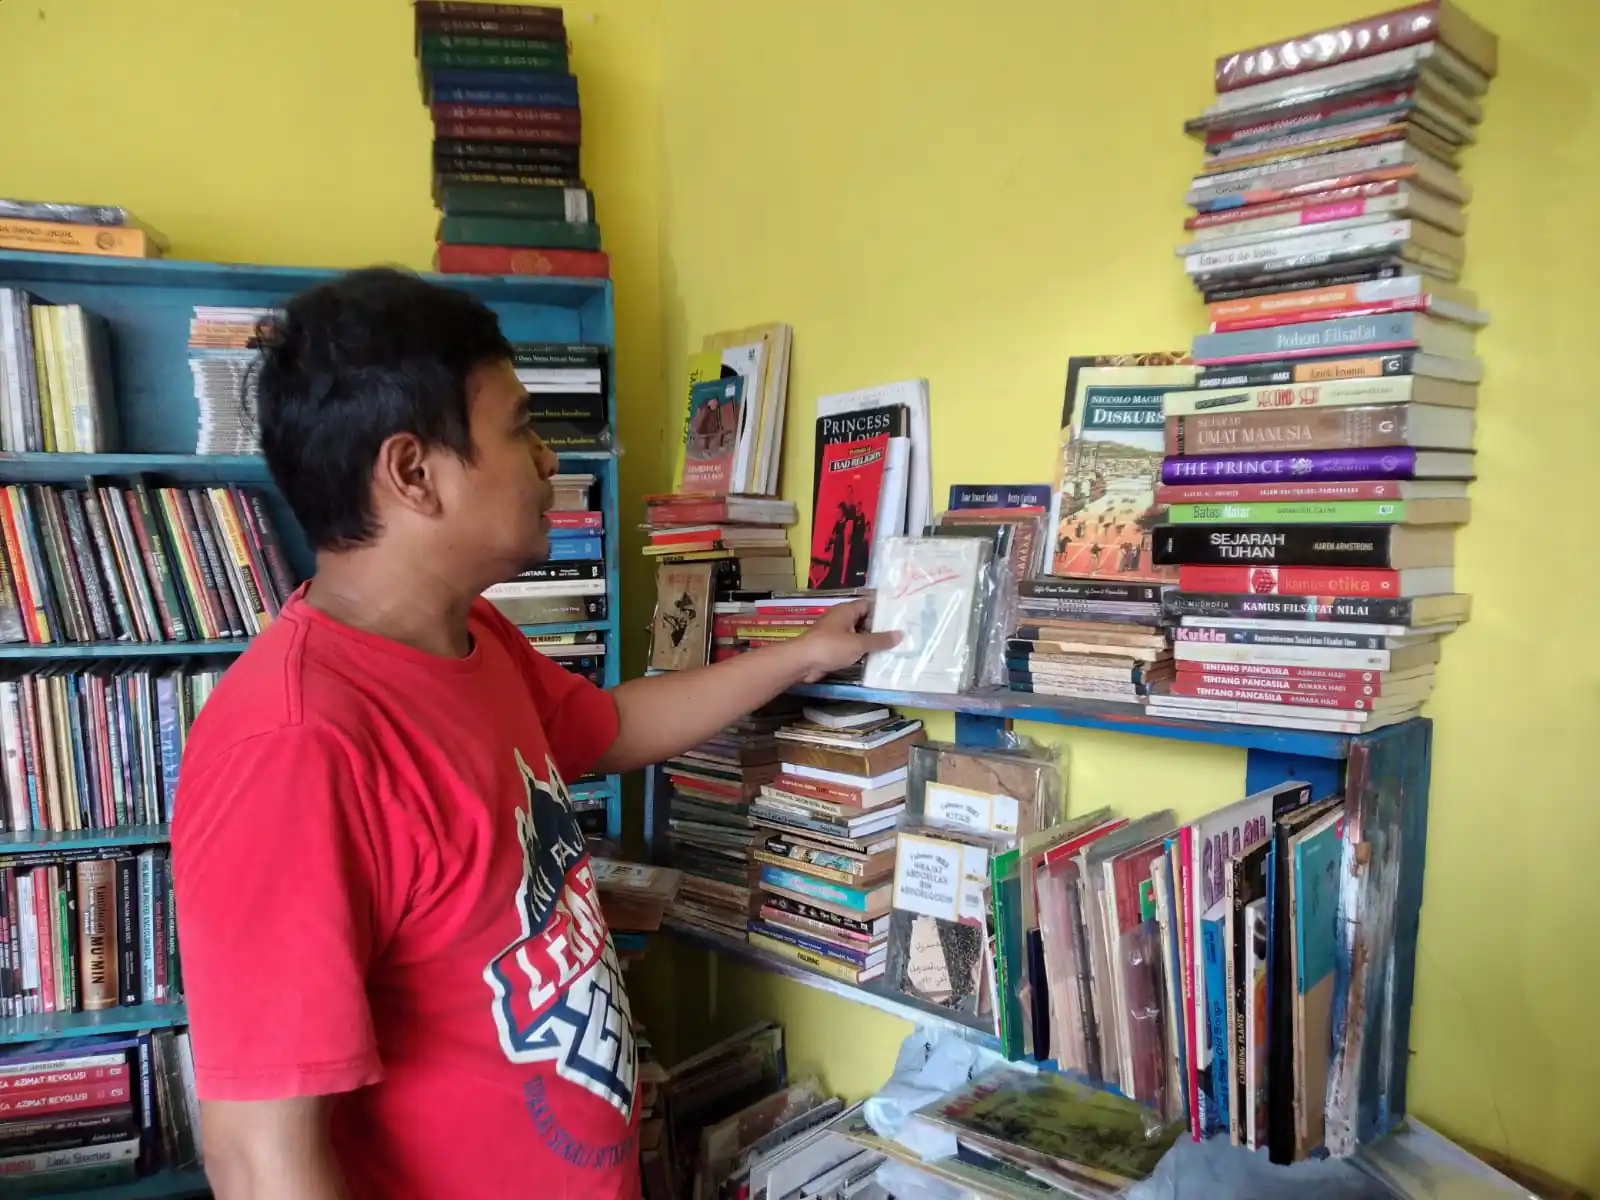 Toko Buku Bandung hingga sata ini masih eksis menjual buku antik dan menjual buku kuno seharga Rp 25 juta. (Hendrik Muchlison/Jabar Ekspres)